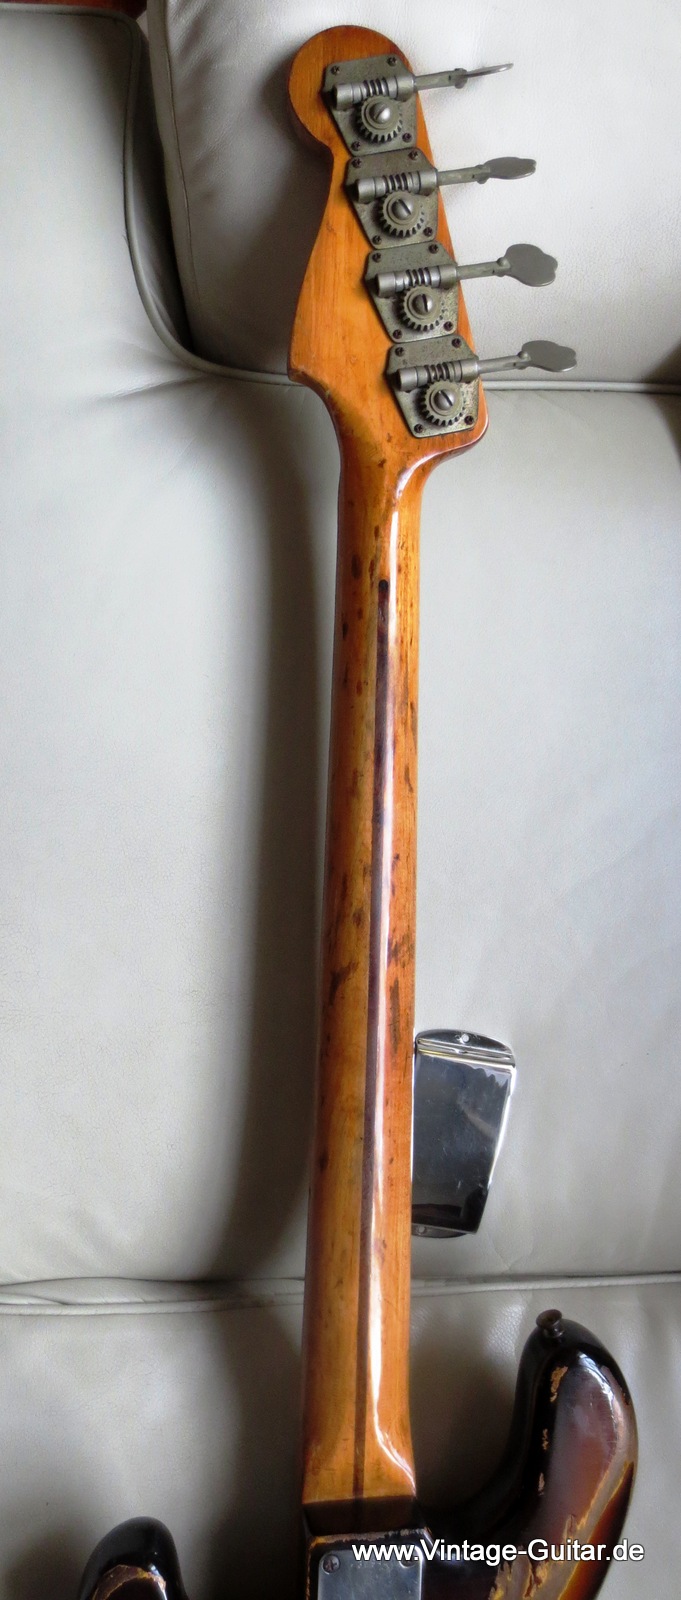 Fender_Precision_Bass_1958-anodized-pickguard-008.JPG